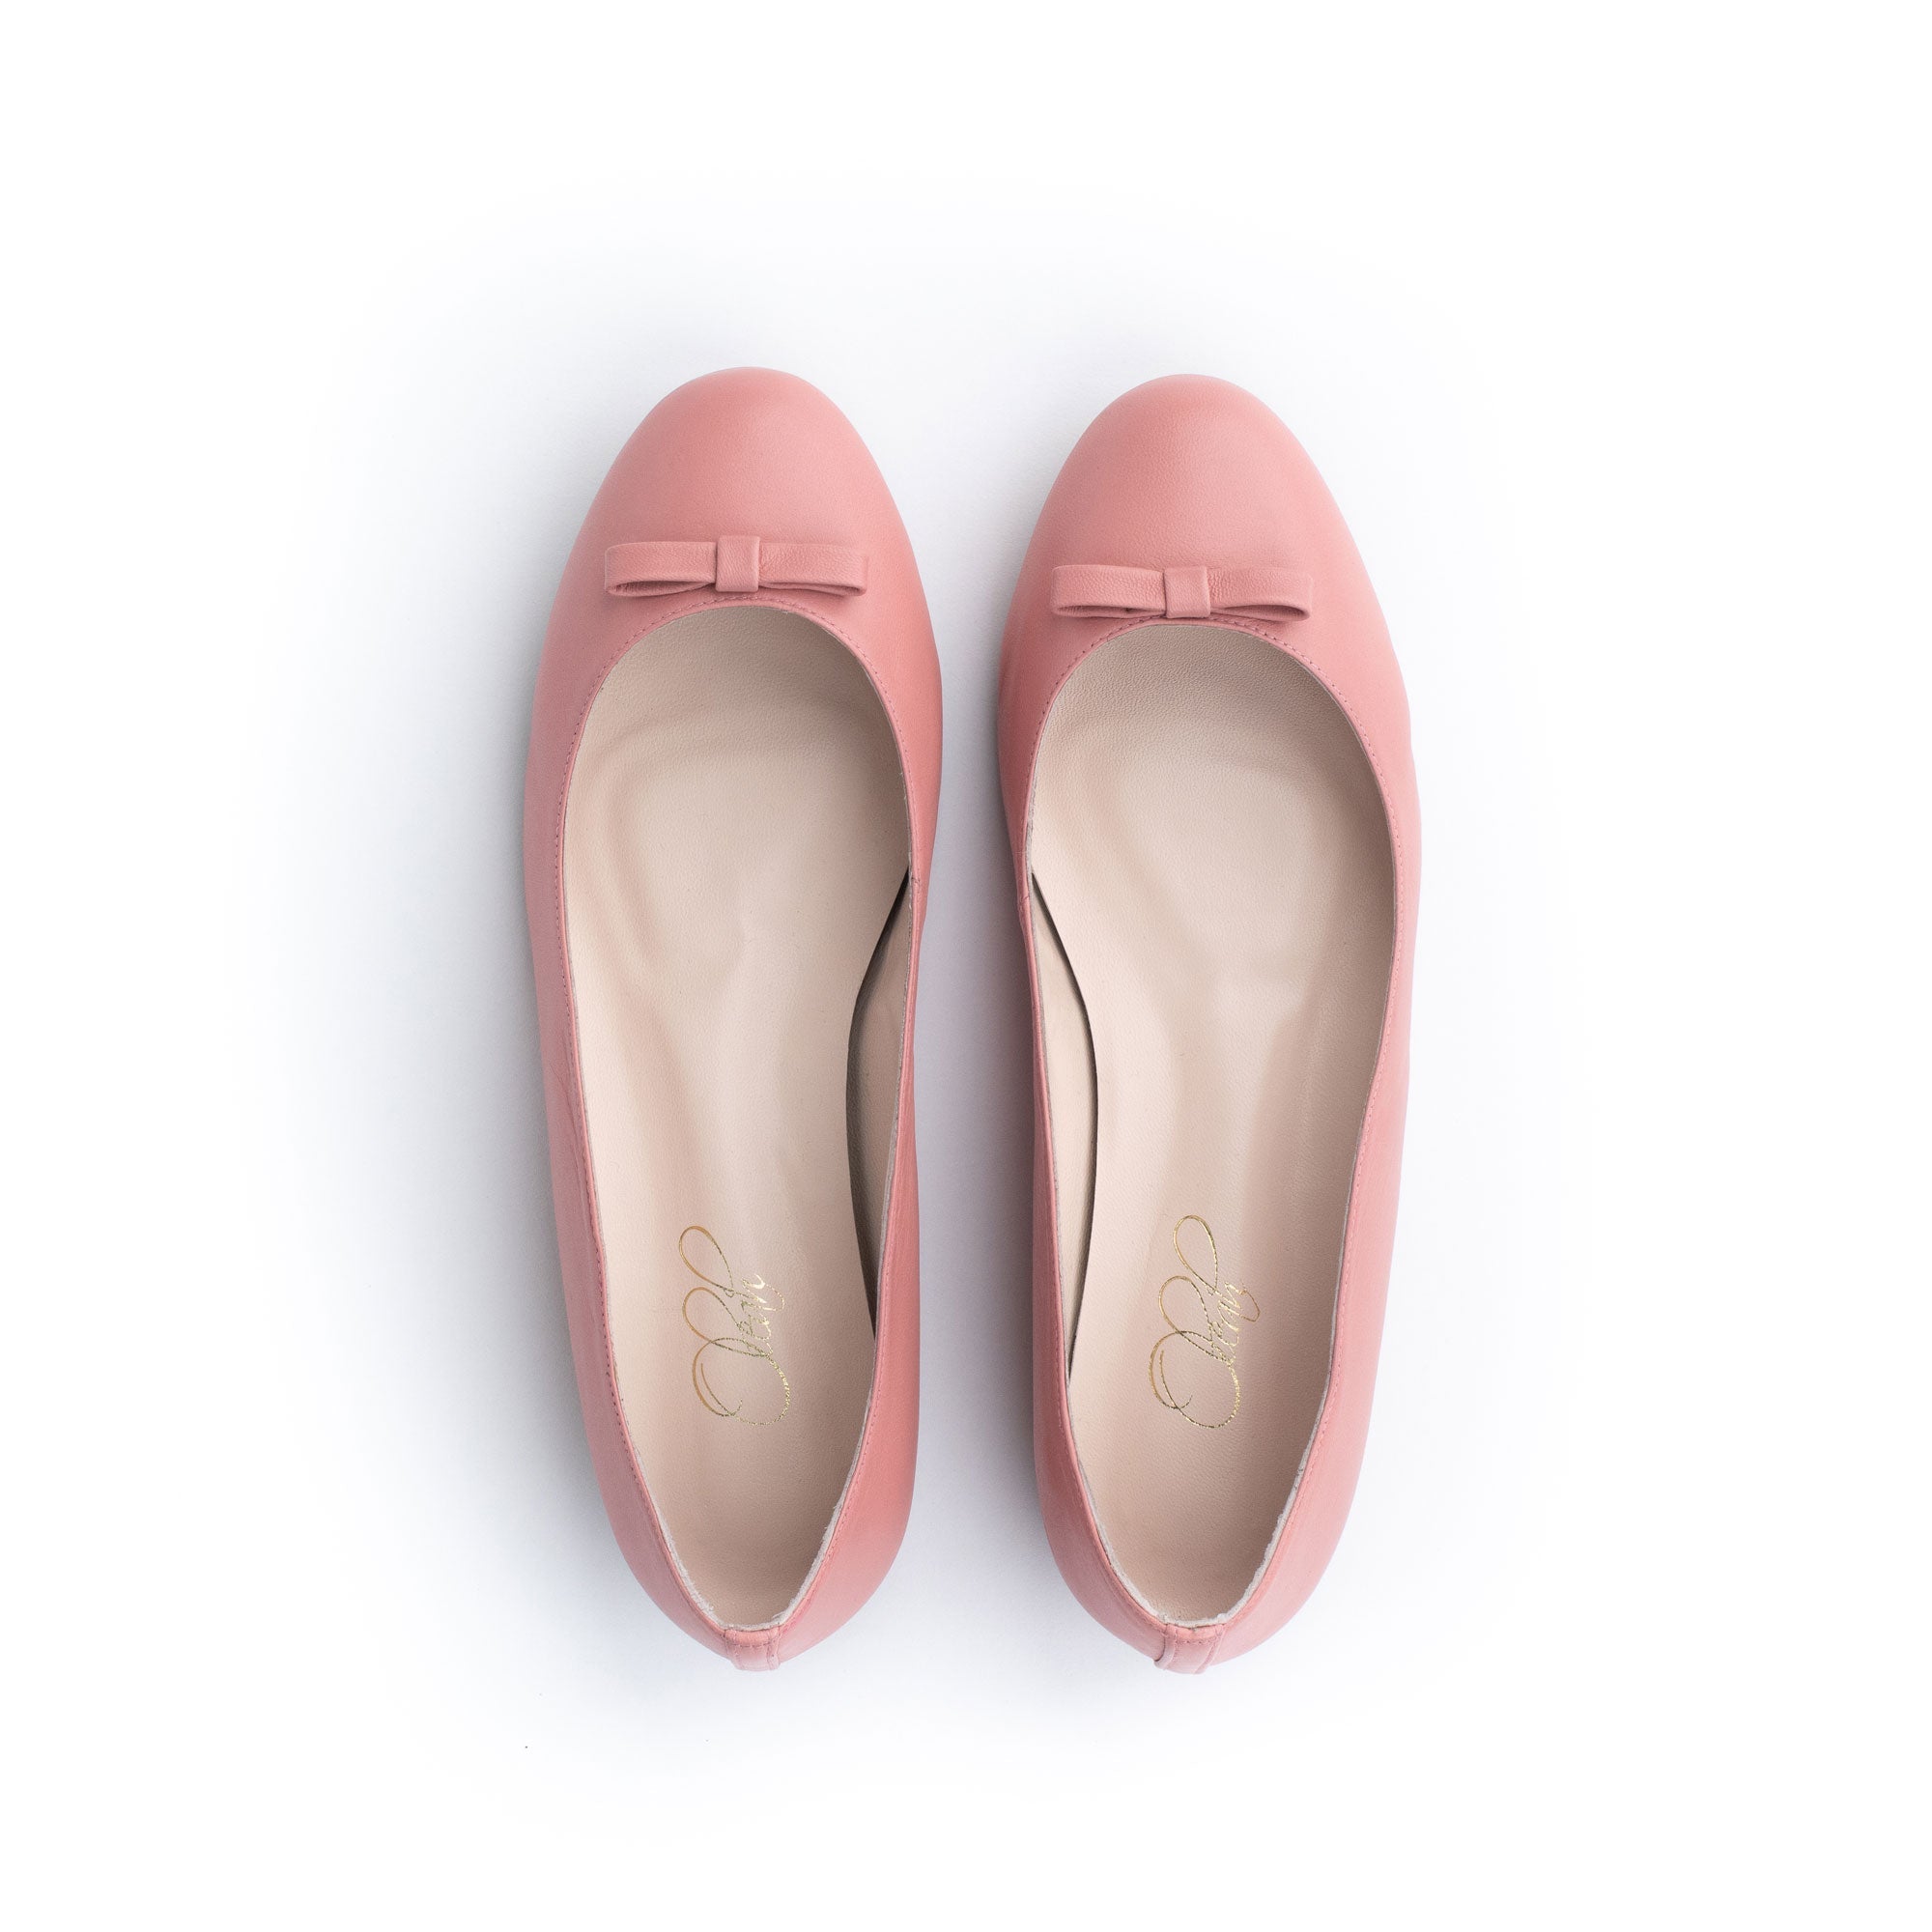 oleah shoes rose pink comfortable ballerina flats top view